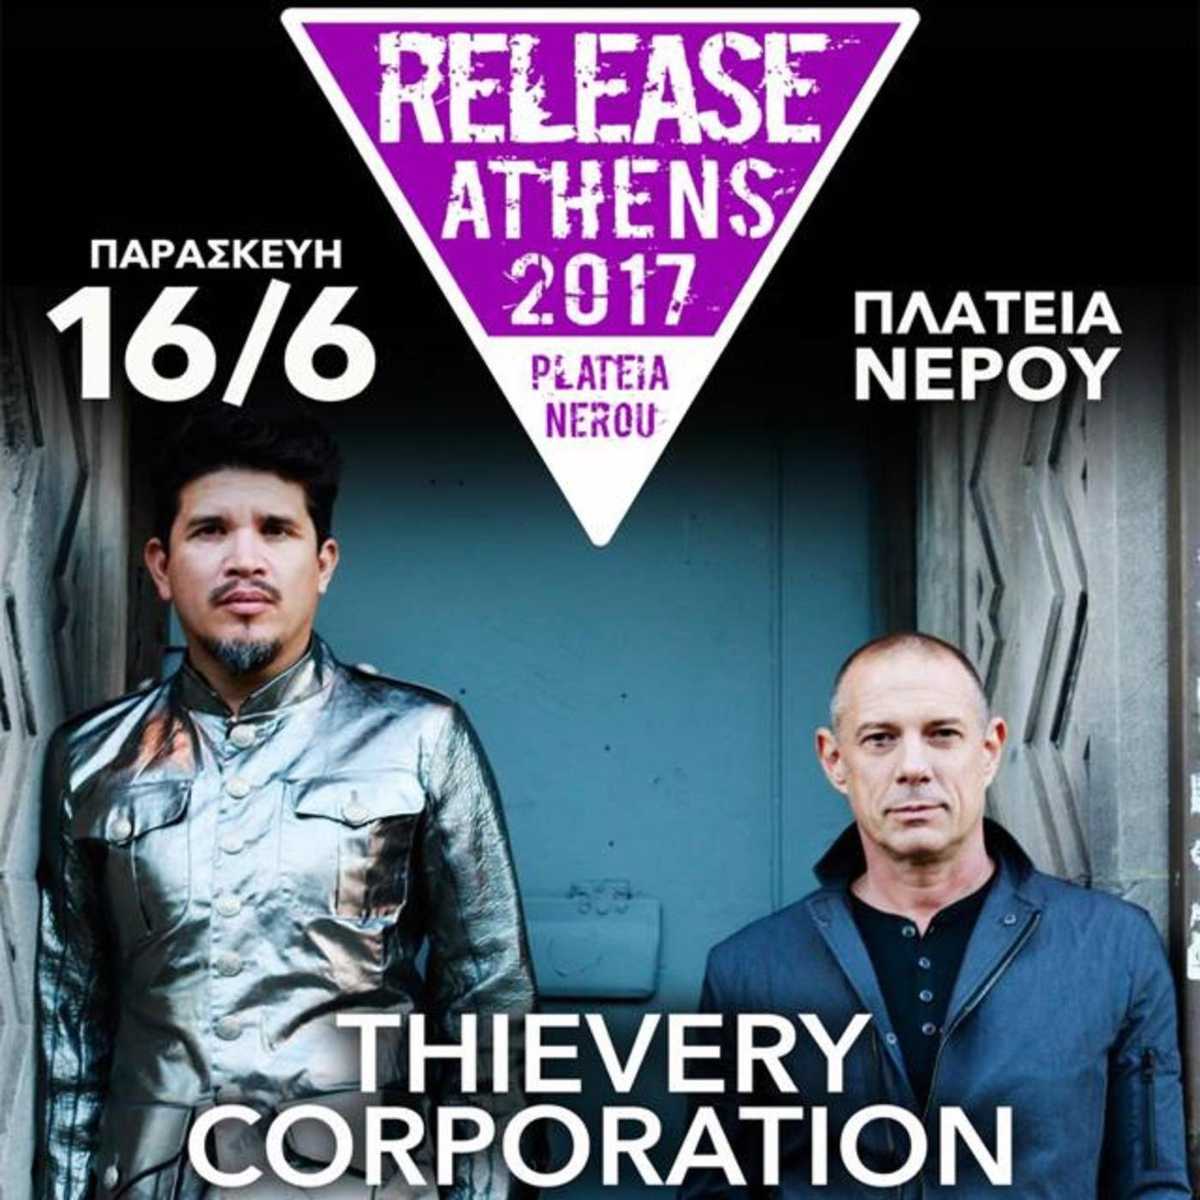 Release Athens 2017: Δεν θα υπάρξουν μειωμένα εισιτήρια & προσφορές